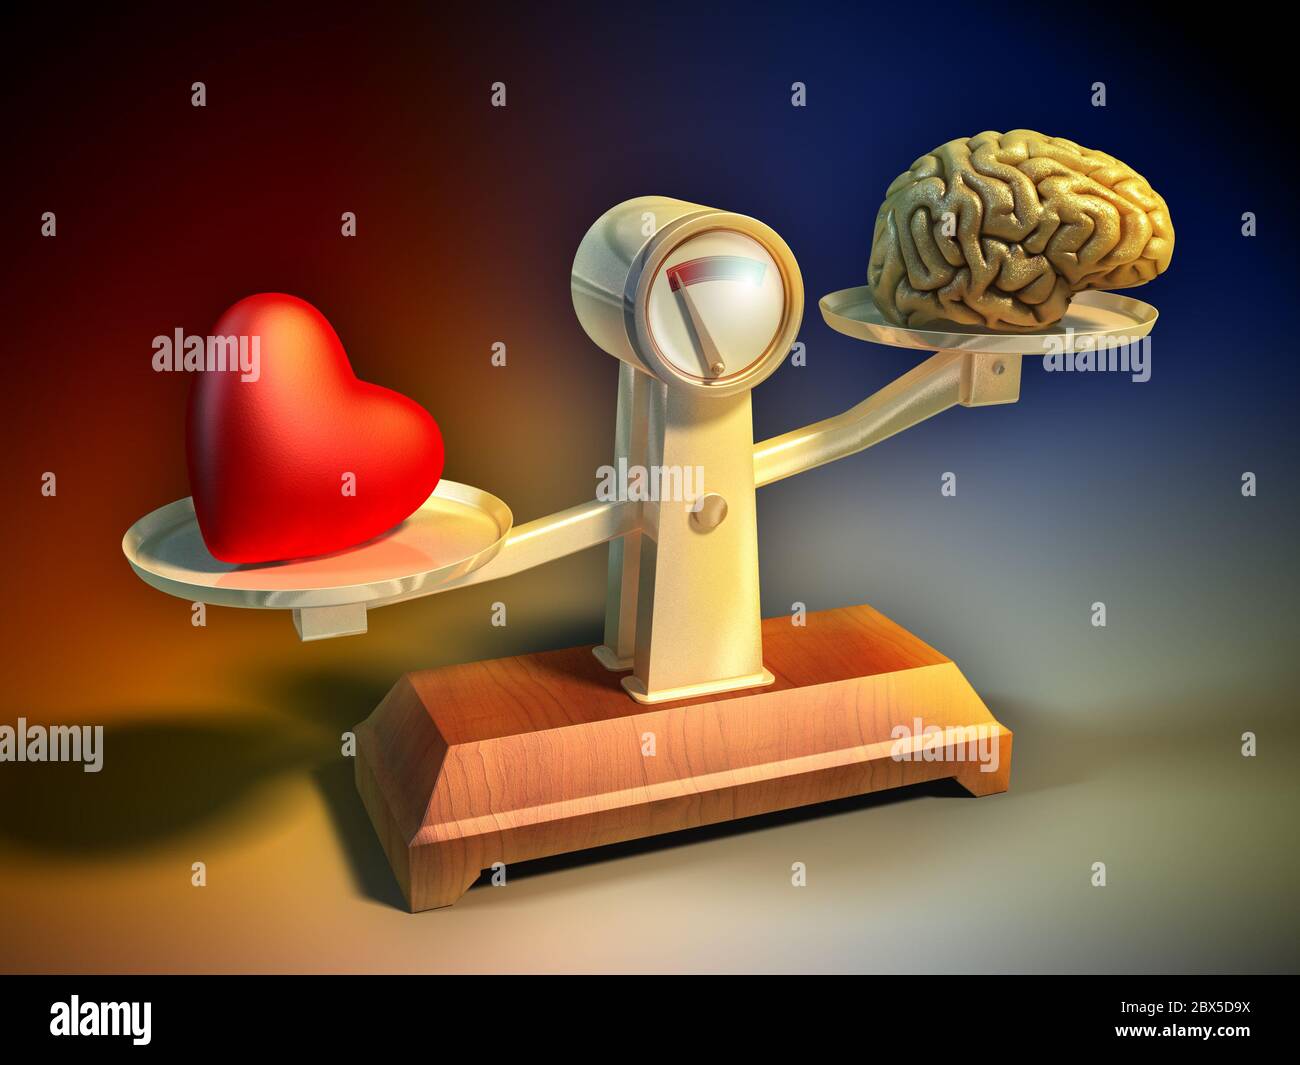 Heart and brain on a balance scale. Digital illustration. Stock Photo